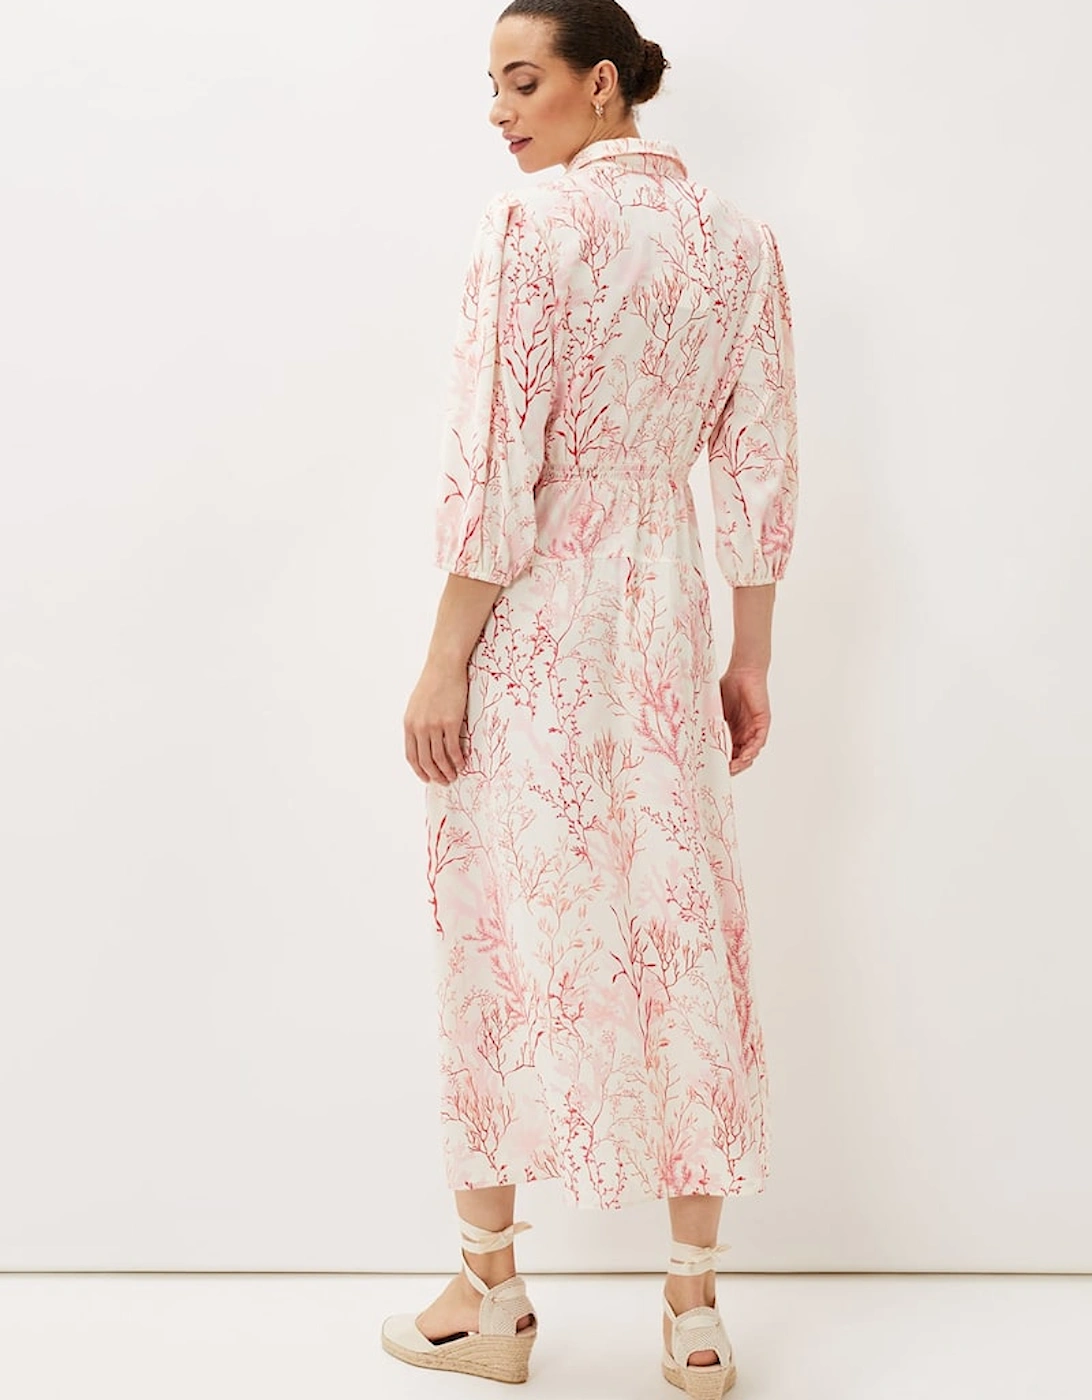 Tana Coral Printed Midi Dress